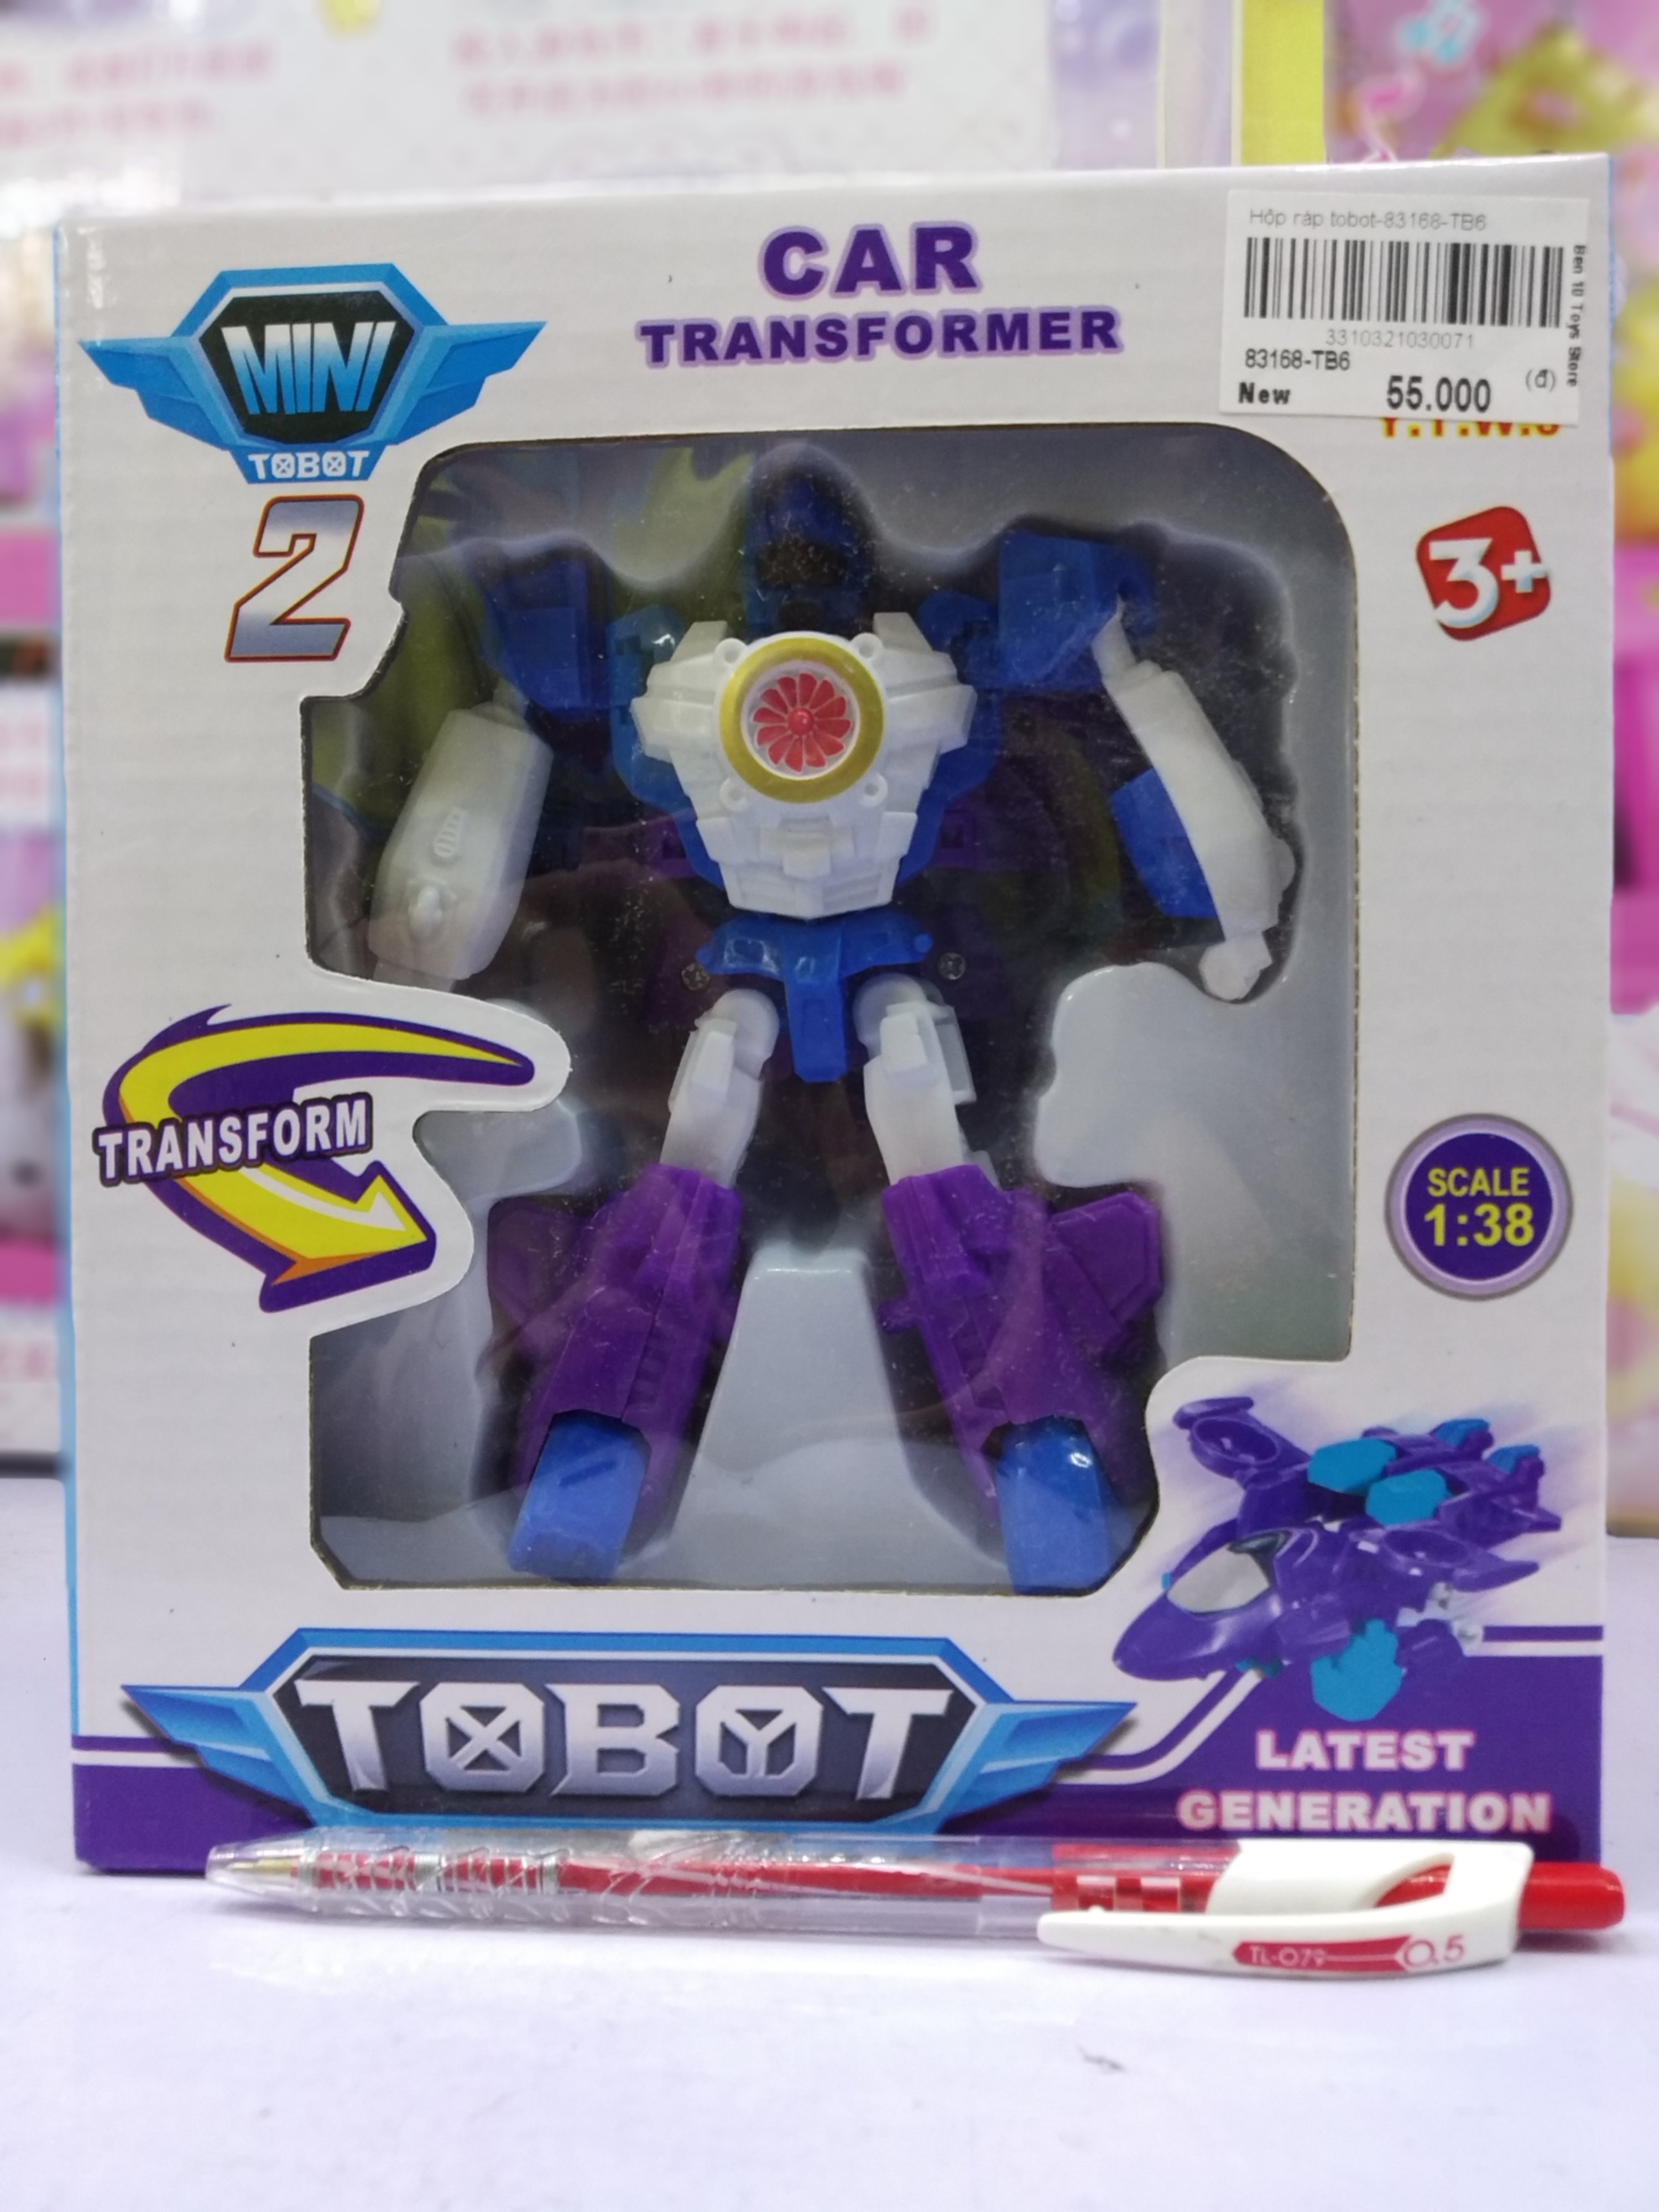 Hộp ráp Tobot-83168-TB6